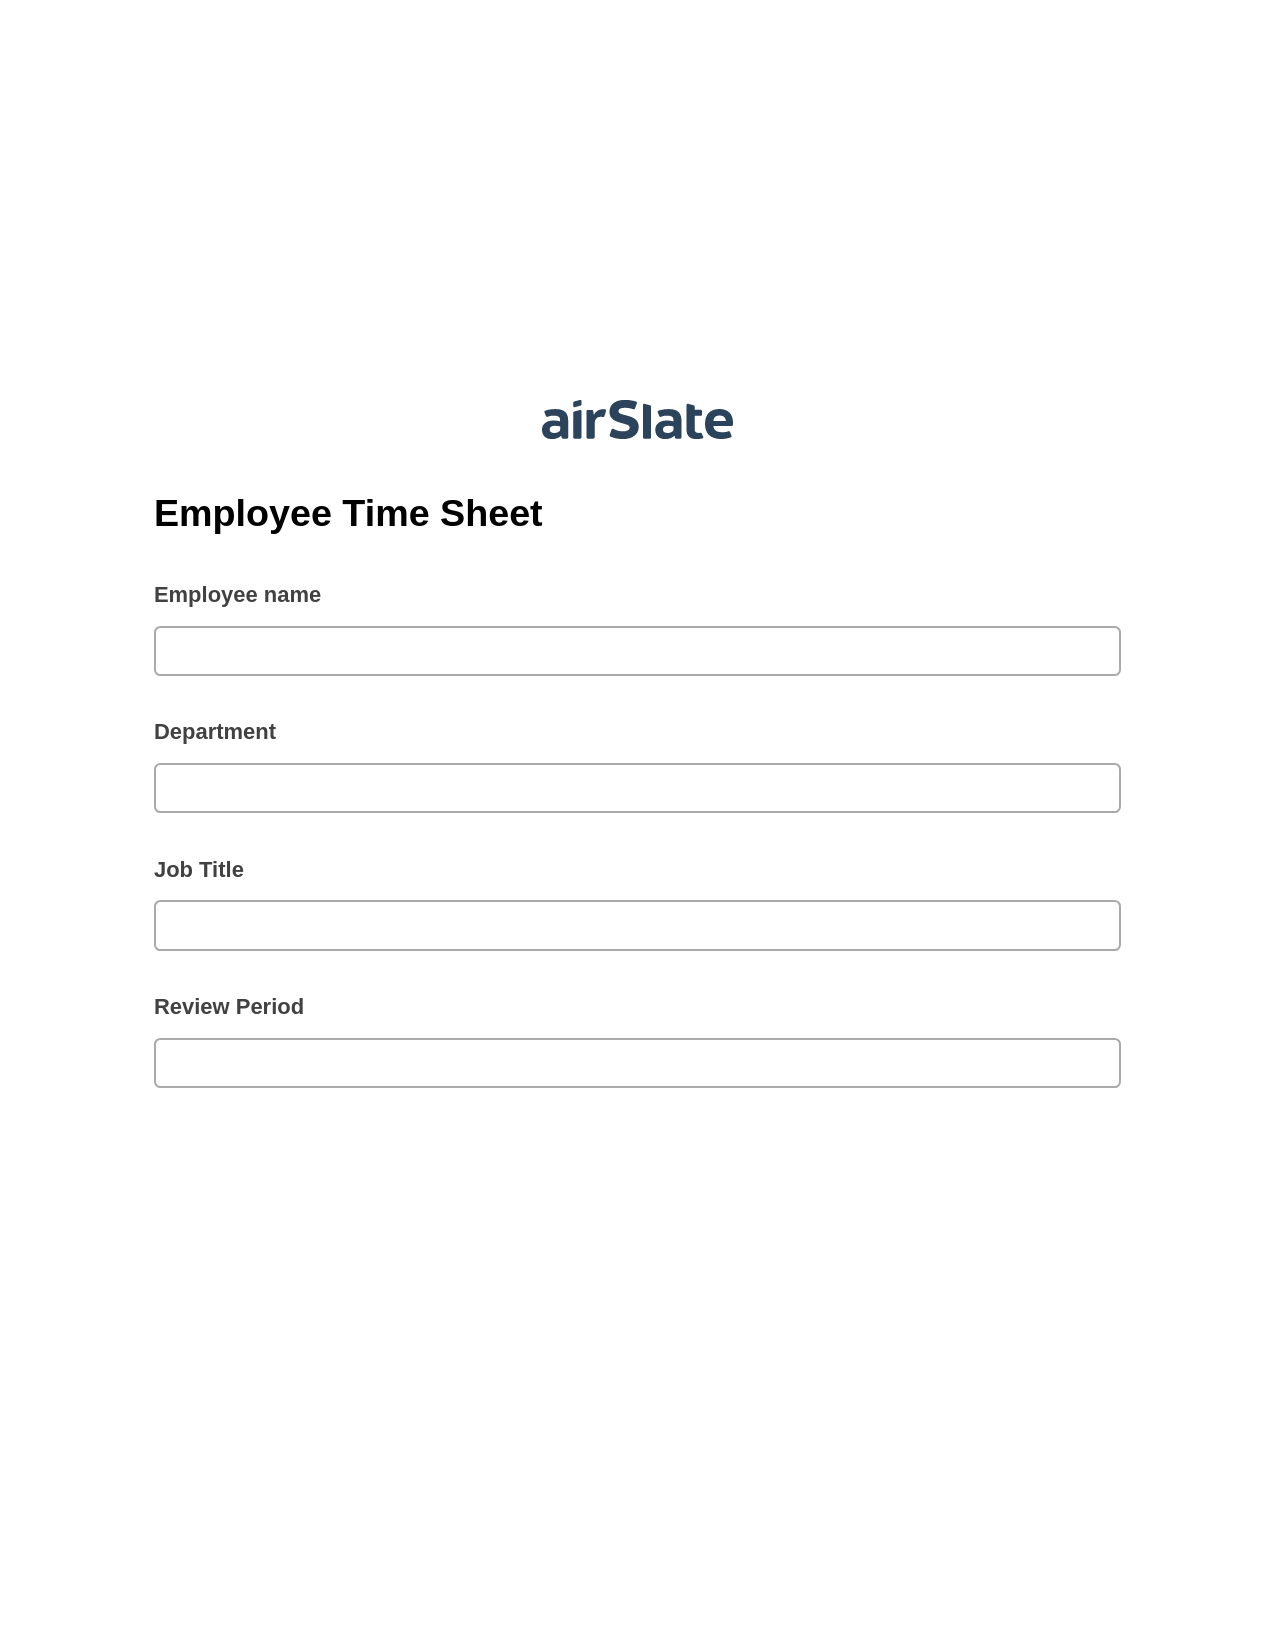 Employee Time Sheet Pre-fill Dropdowns from MySQL Bot, Create slate addon, Archive to OneDrive Bot